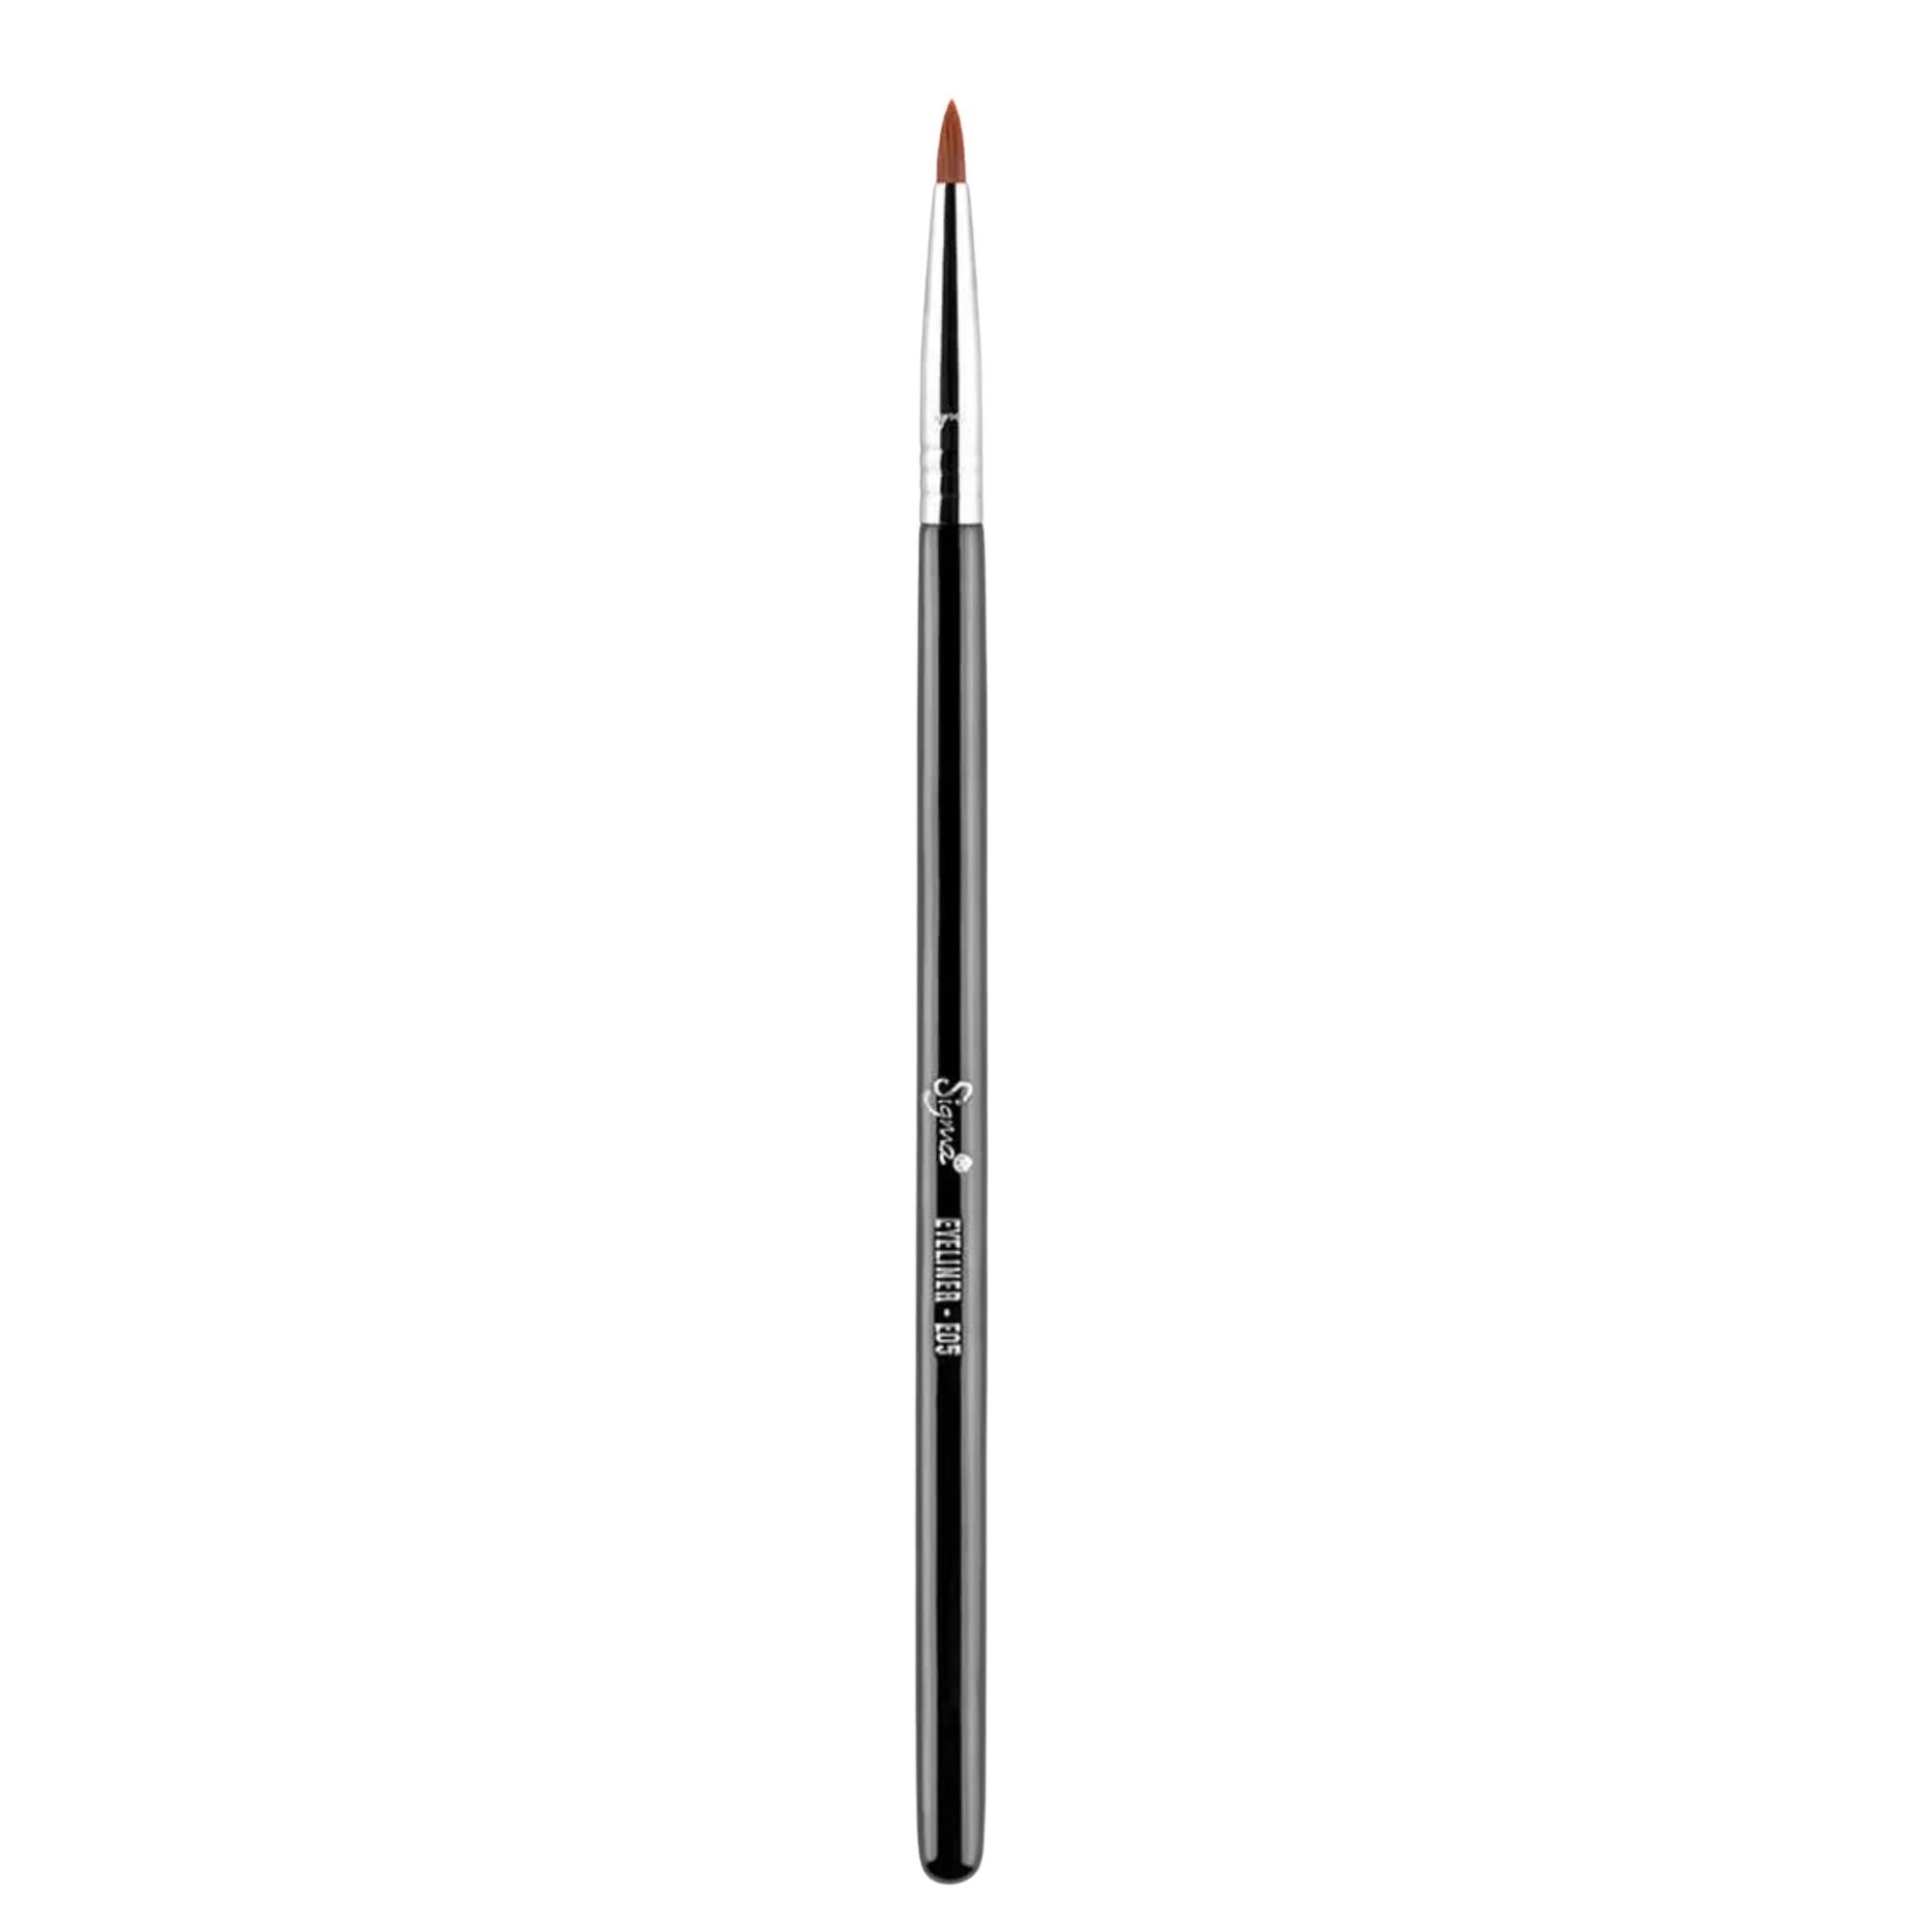 SIGMA E05 Eyeliner Brush - Black/Chrome